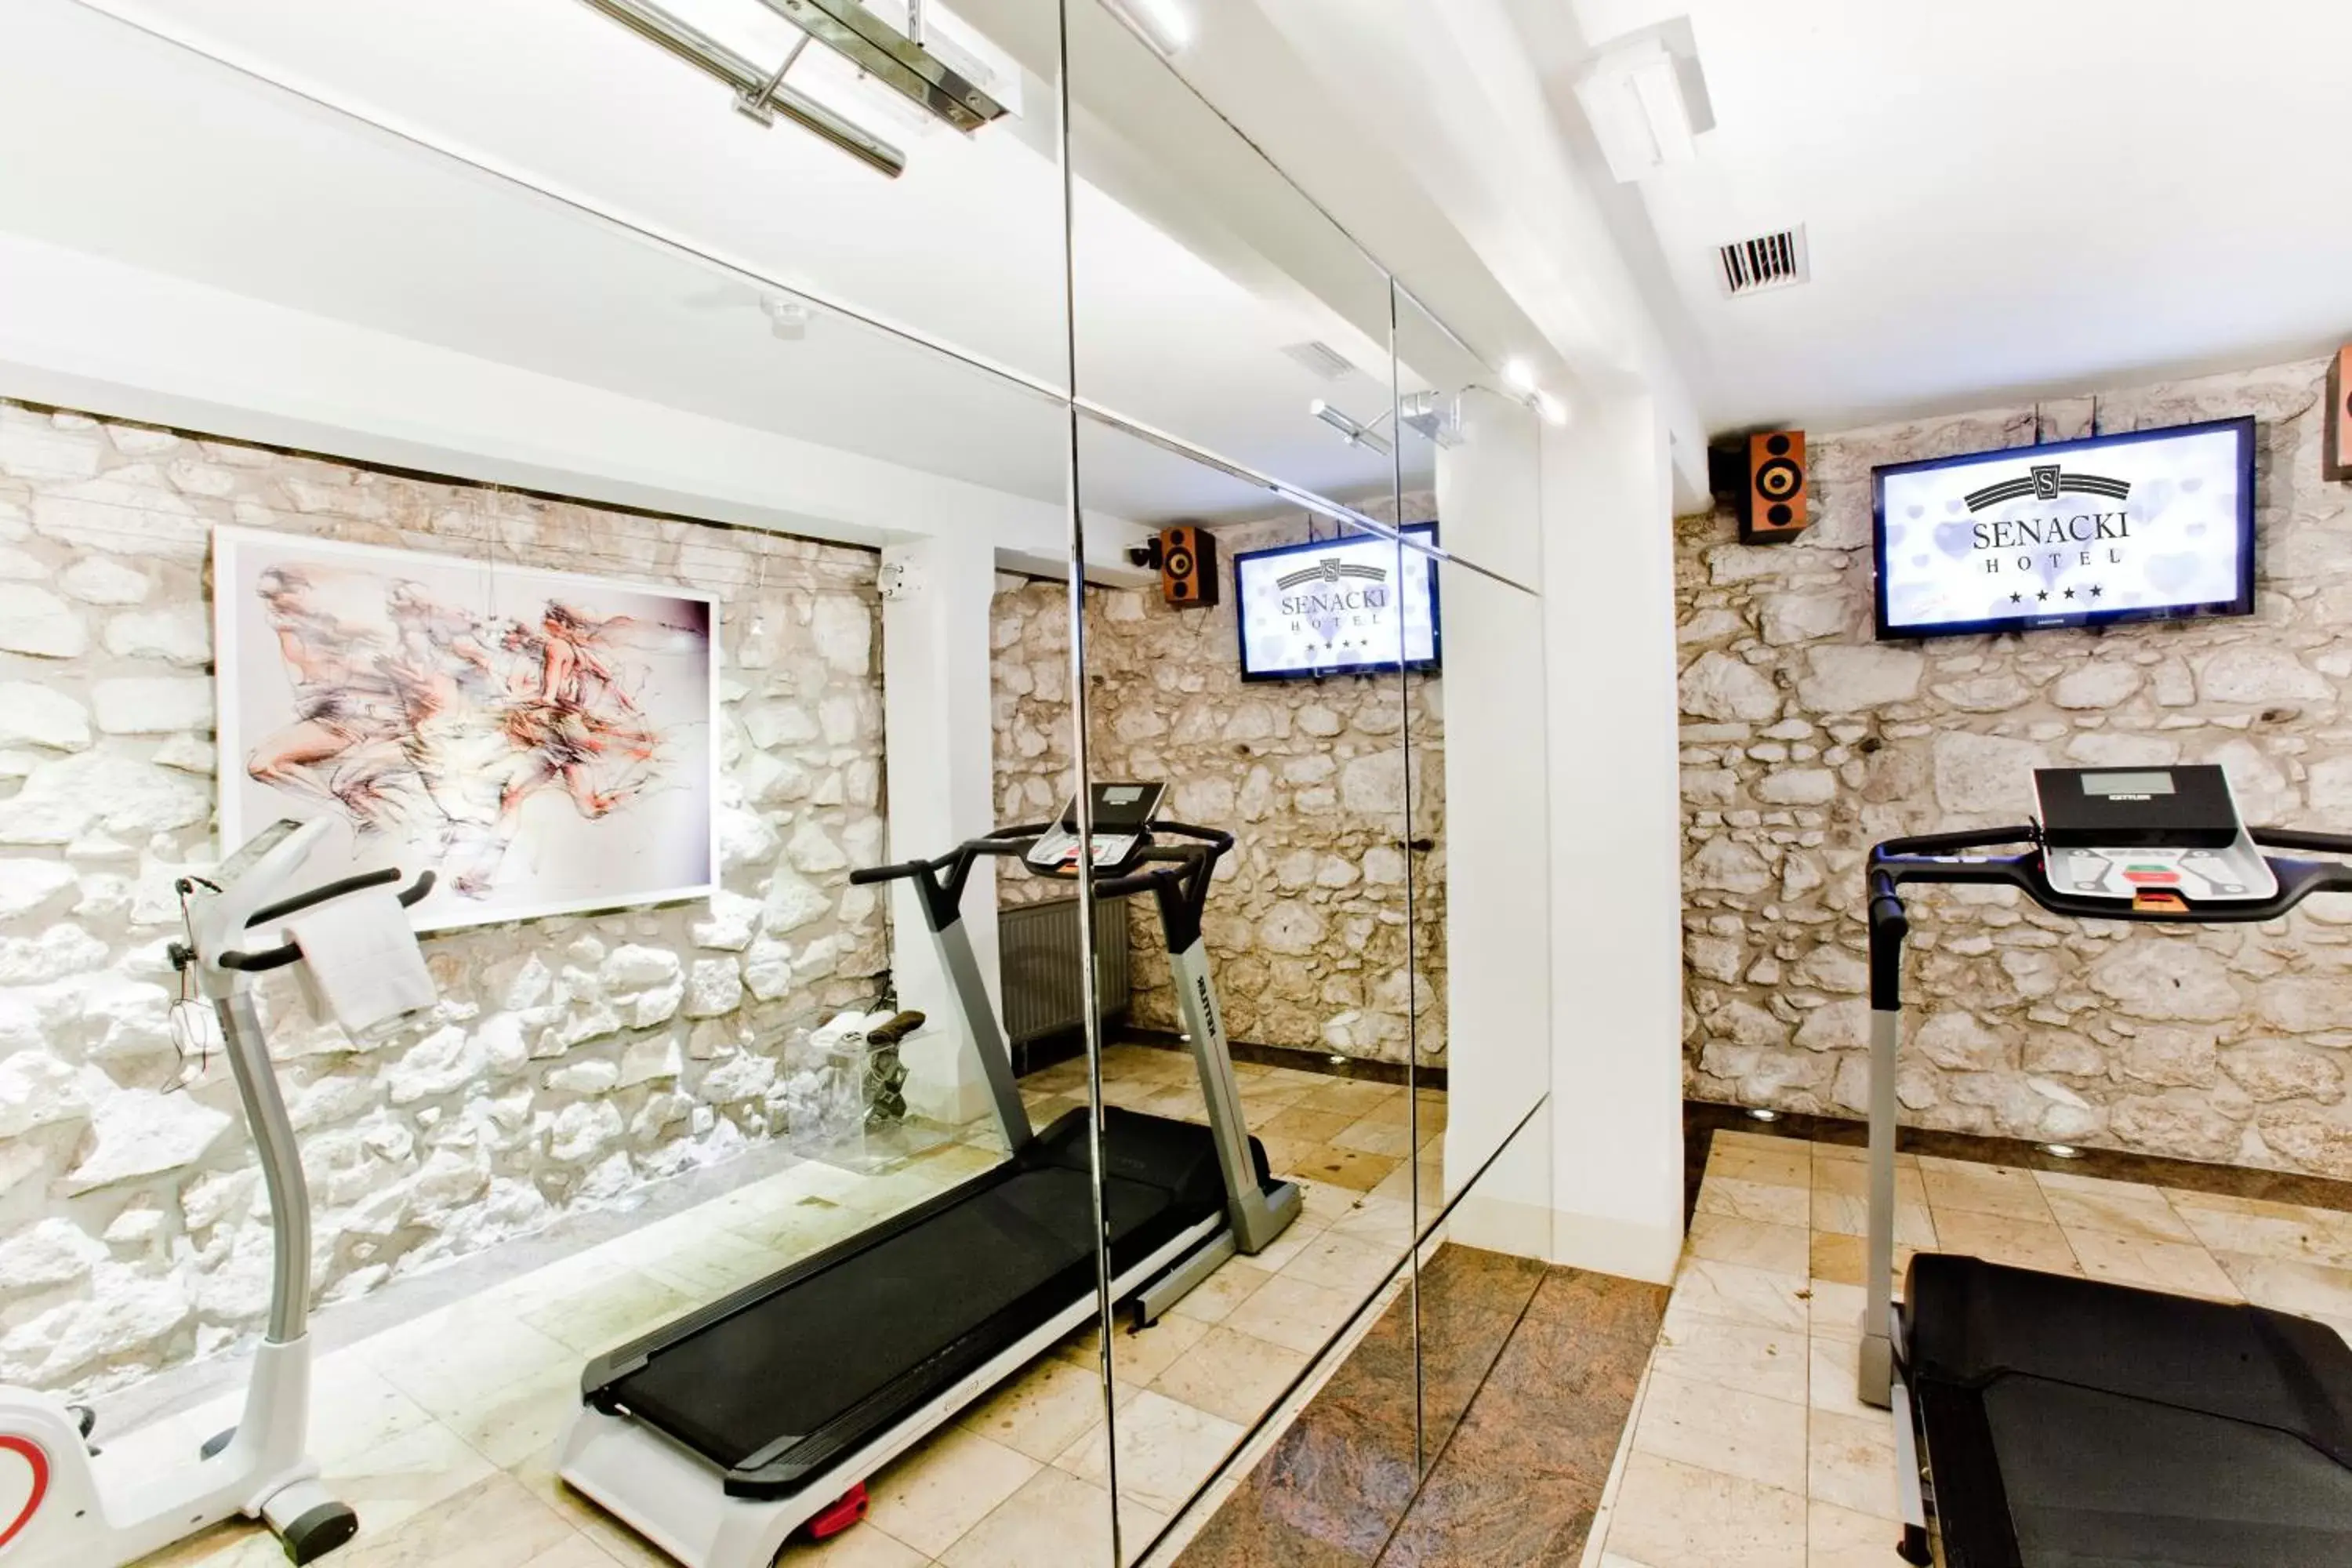 Fitness centre/facilities, Fitness Center/Facilities in Hotel Senacki